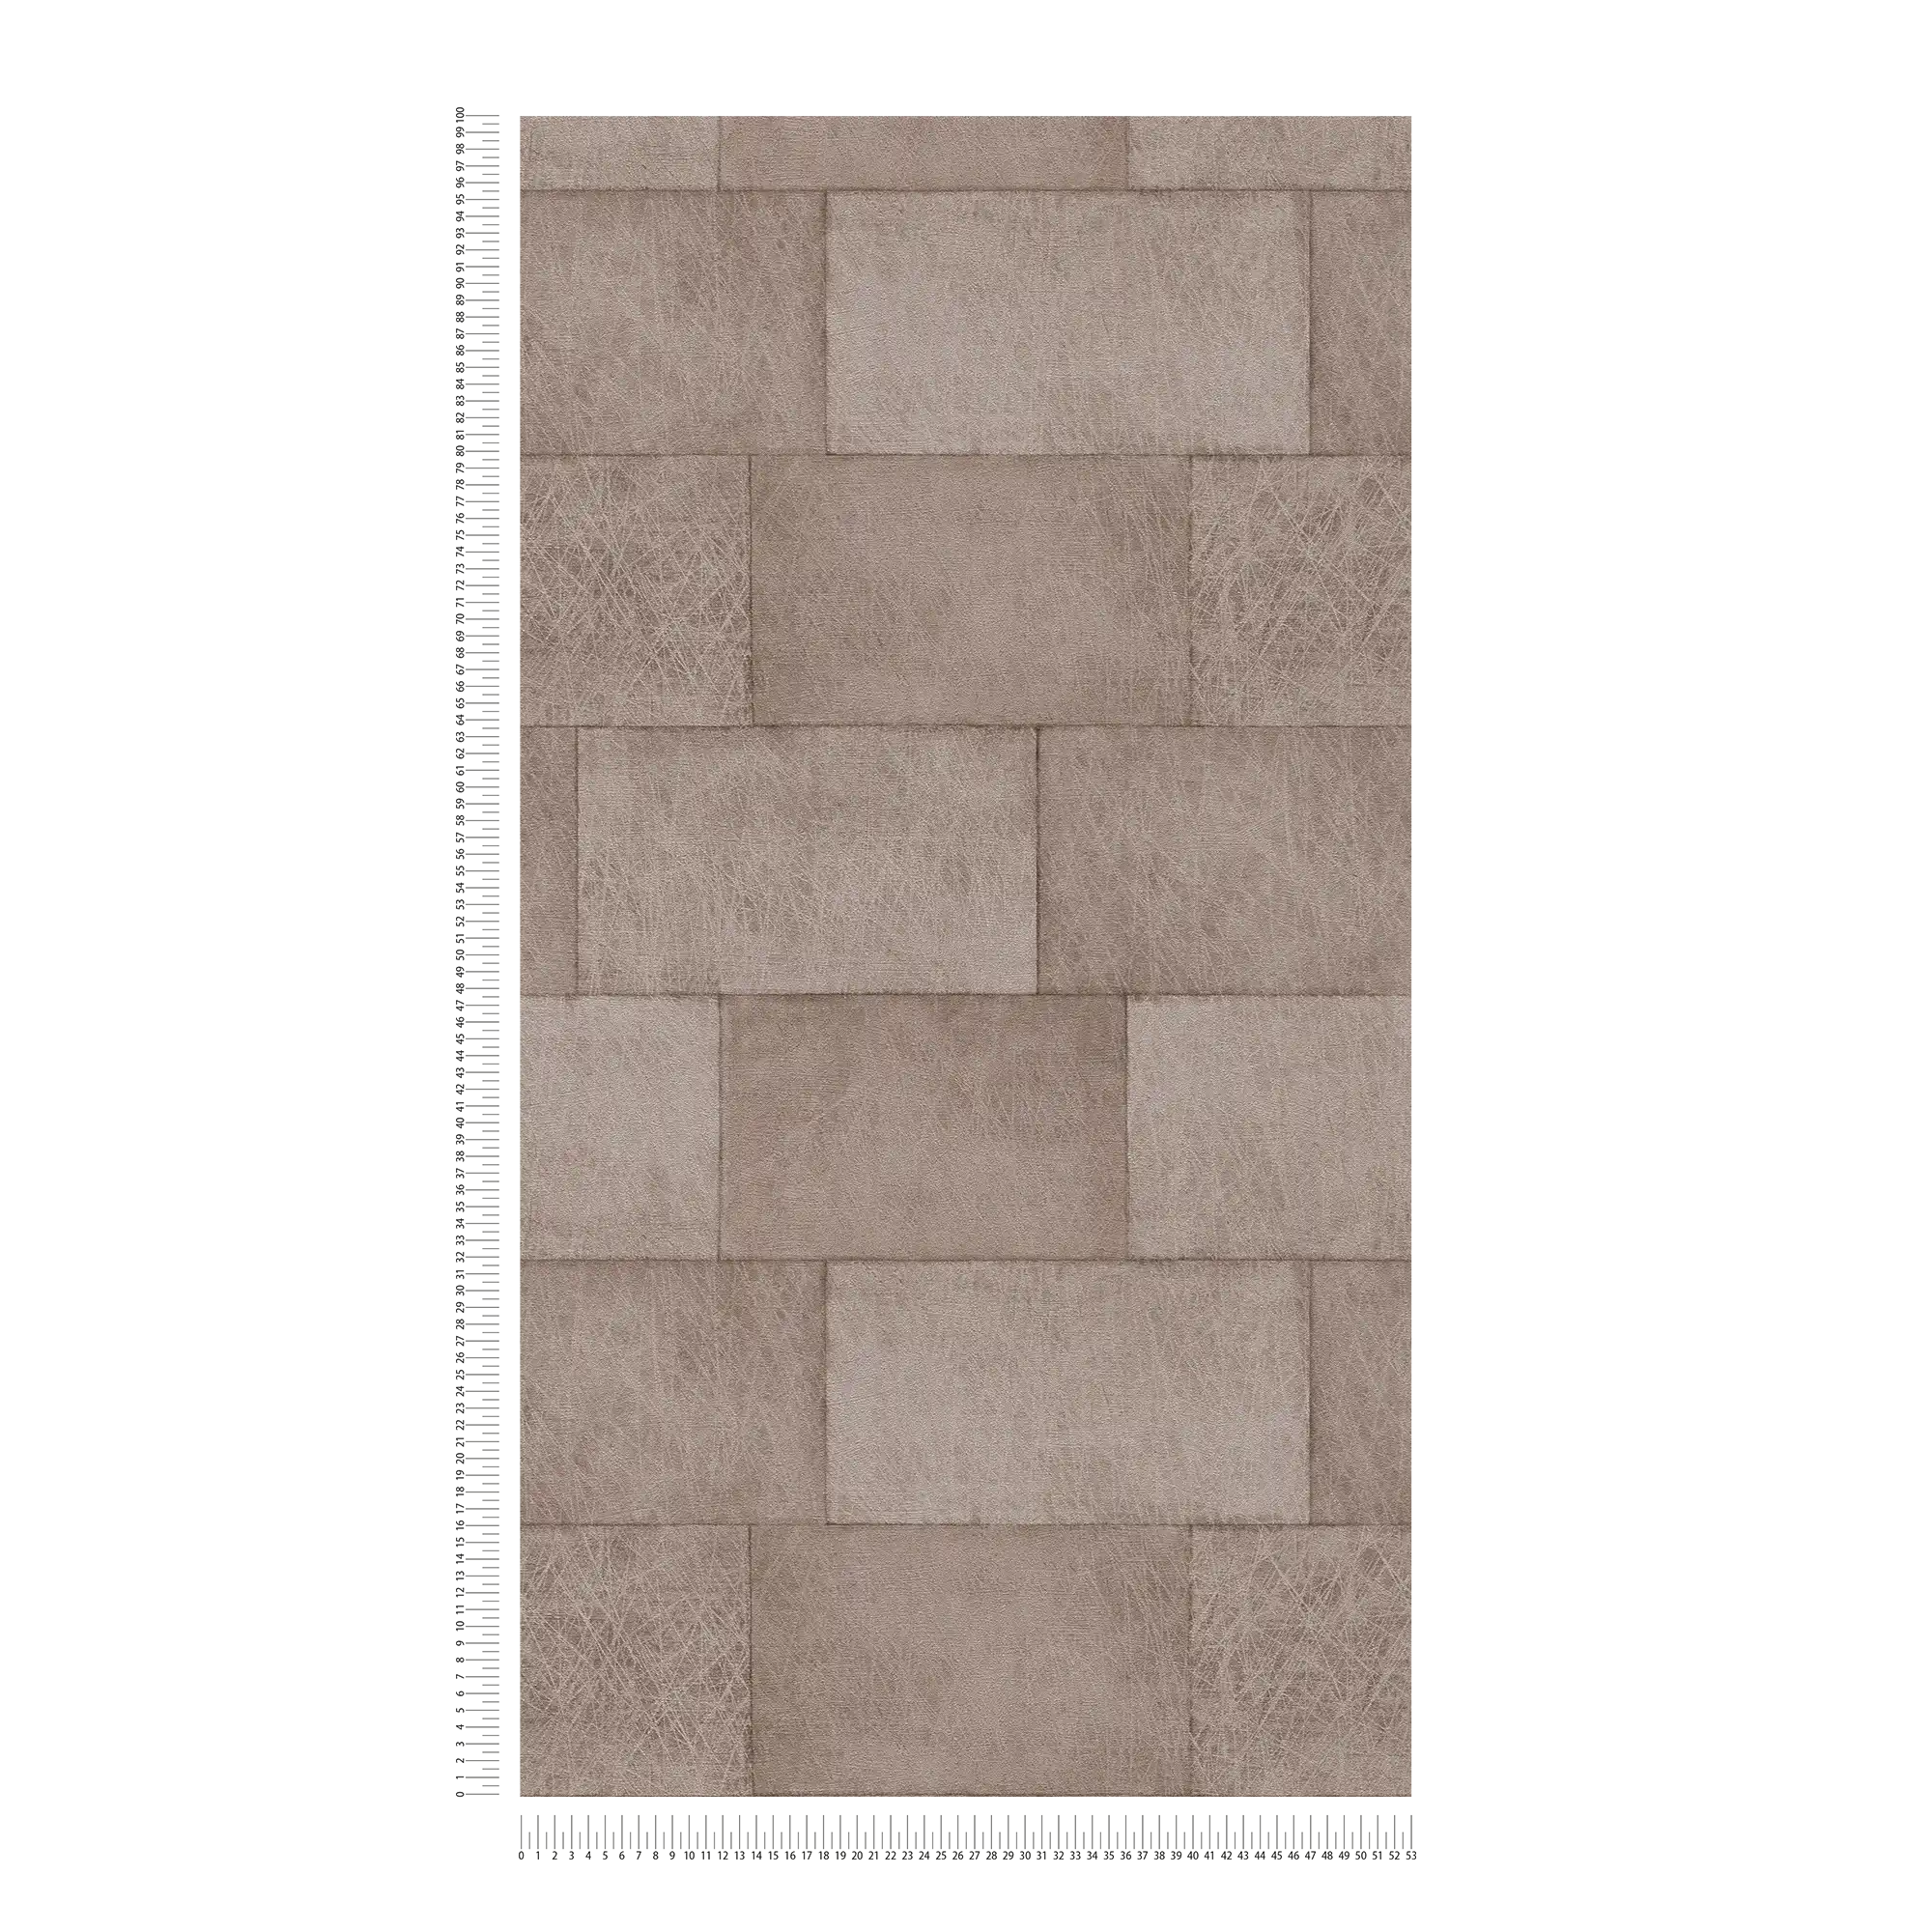             Non-woven wallpaper metallic design with tile pattern - brown
        